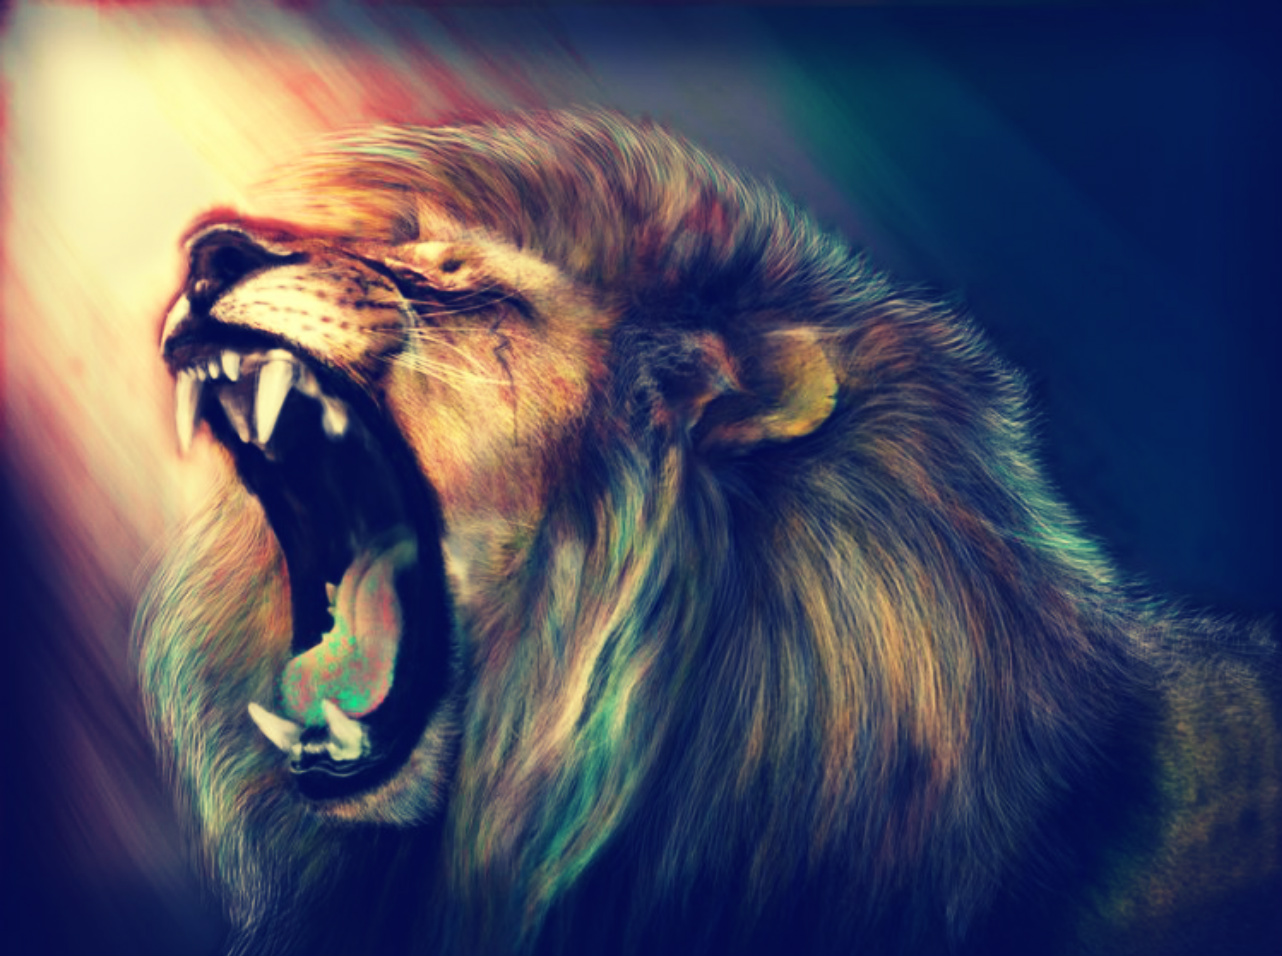 Lion HD Wallpaper Pictures